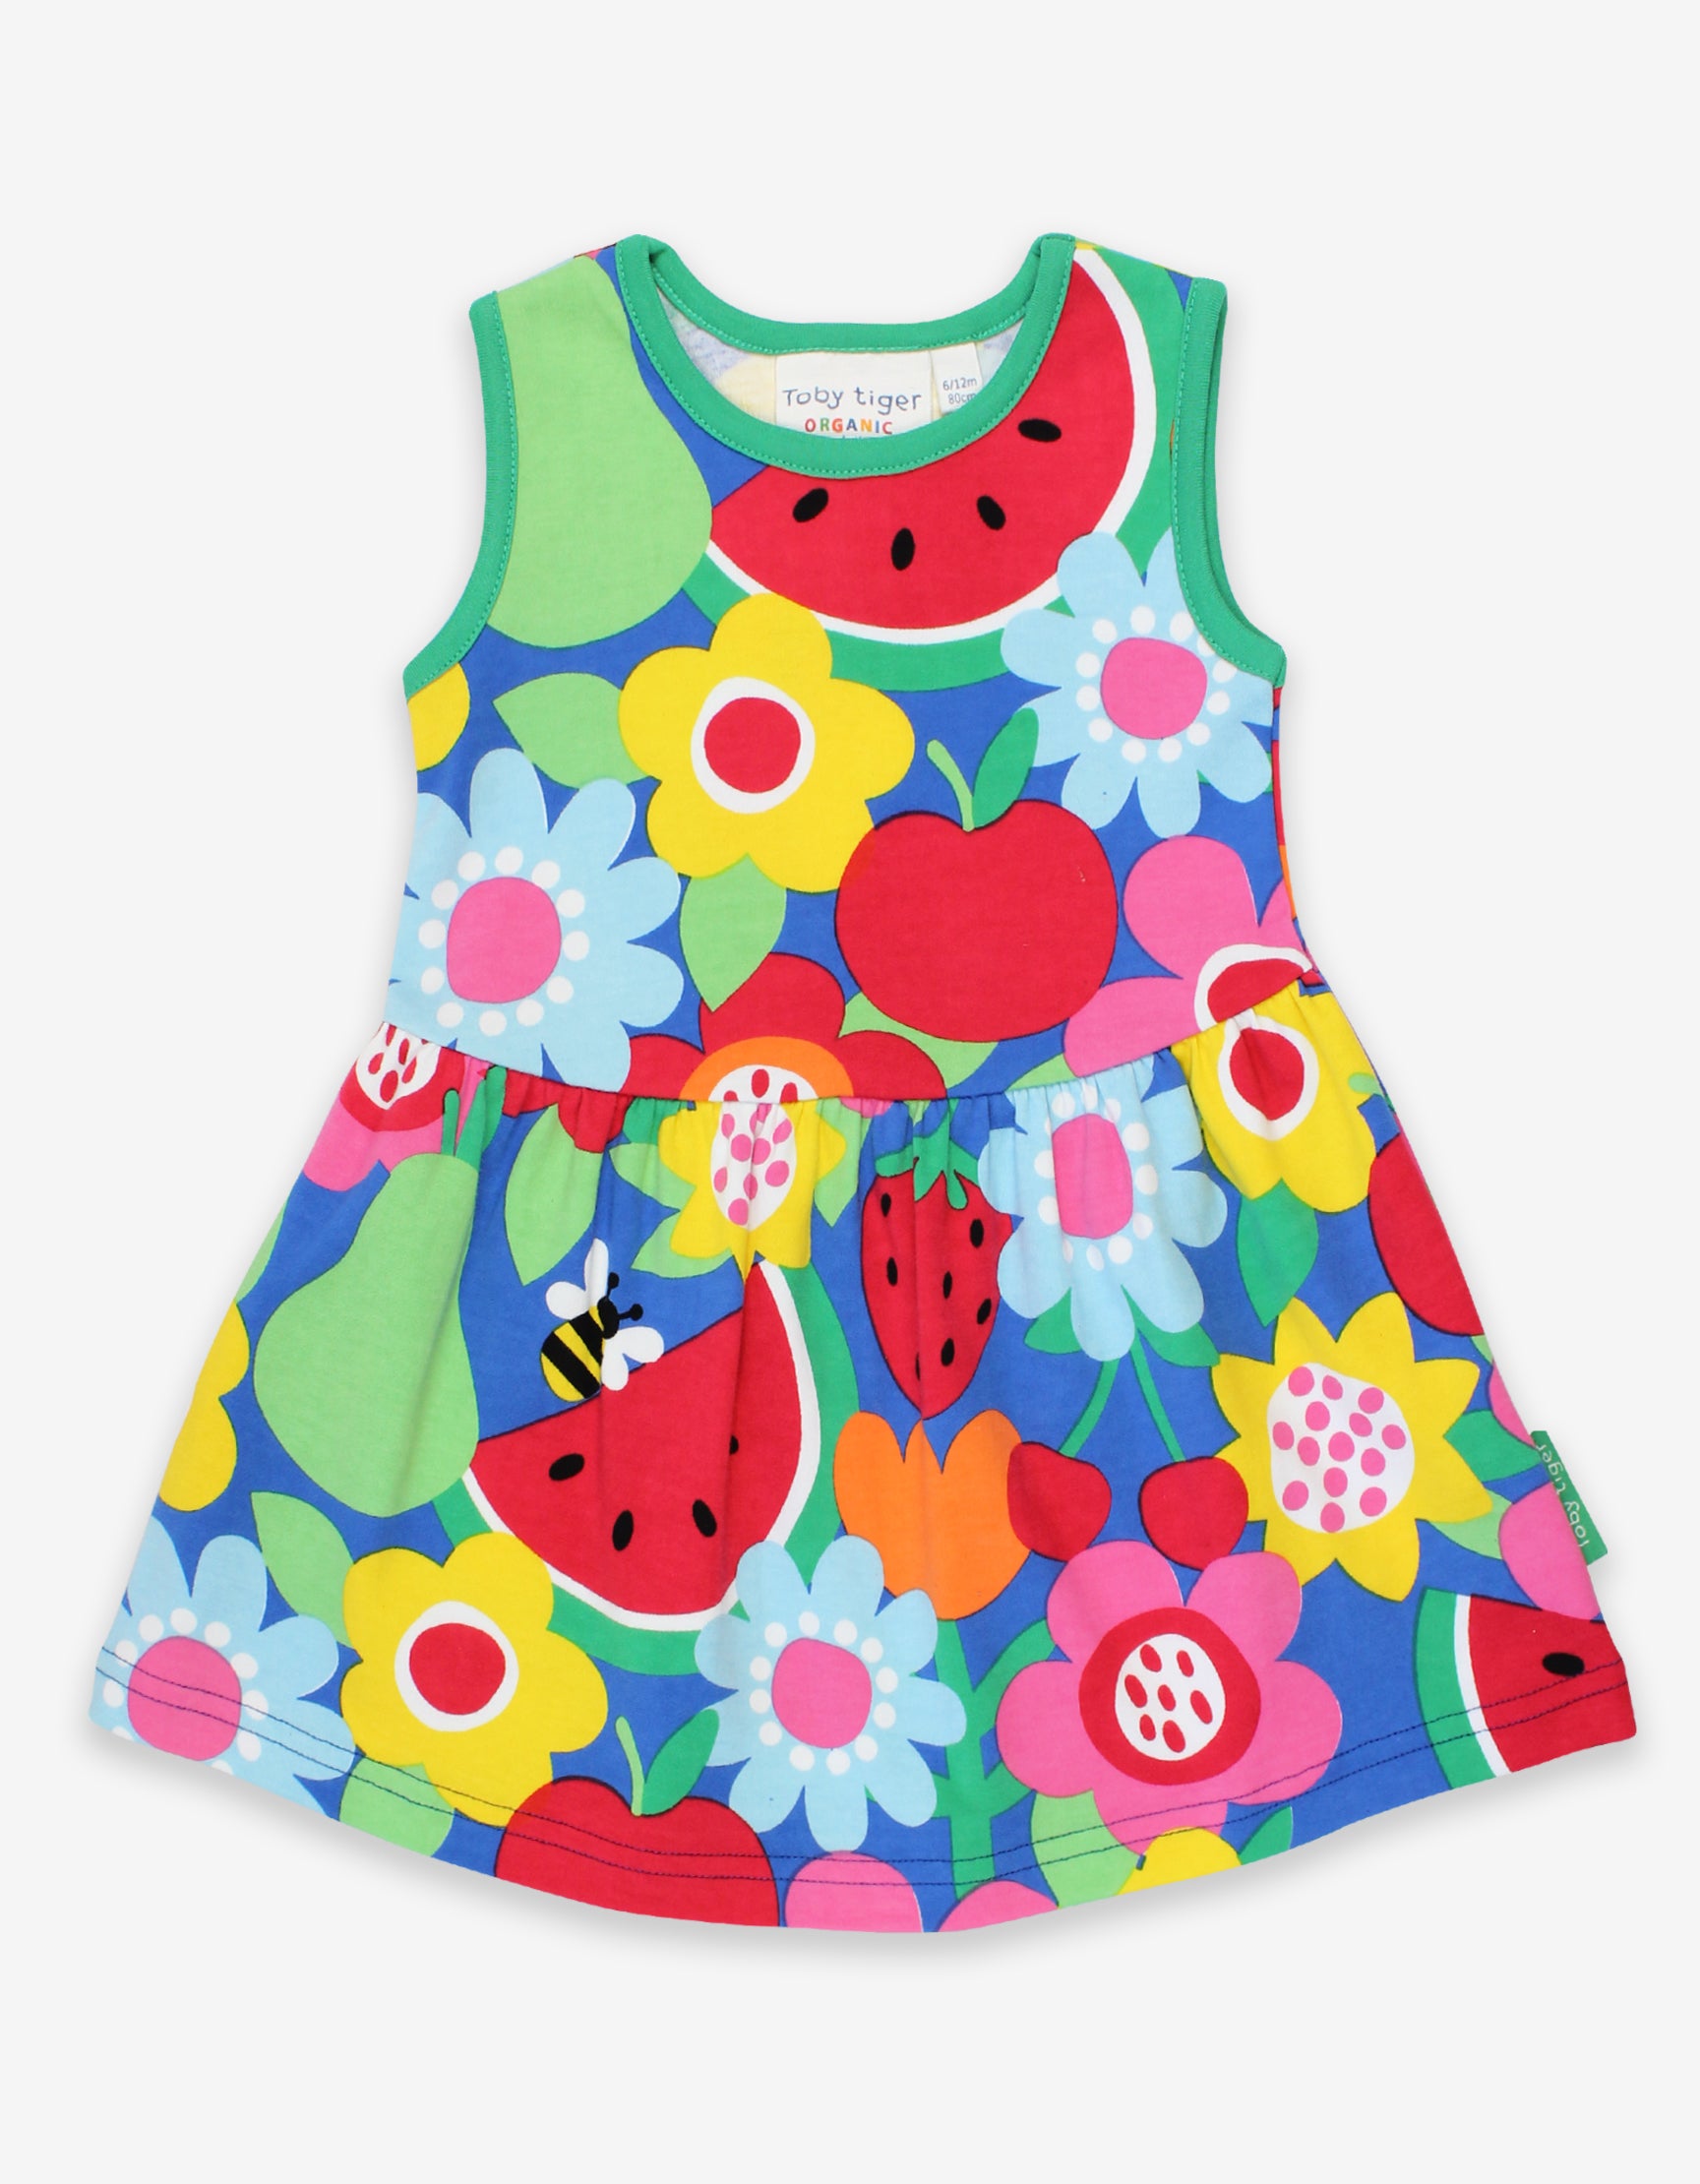 Toby Tiger Organic Sleeveless Summer Dress - Fruit Flower Print